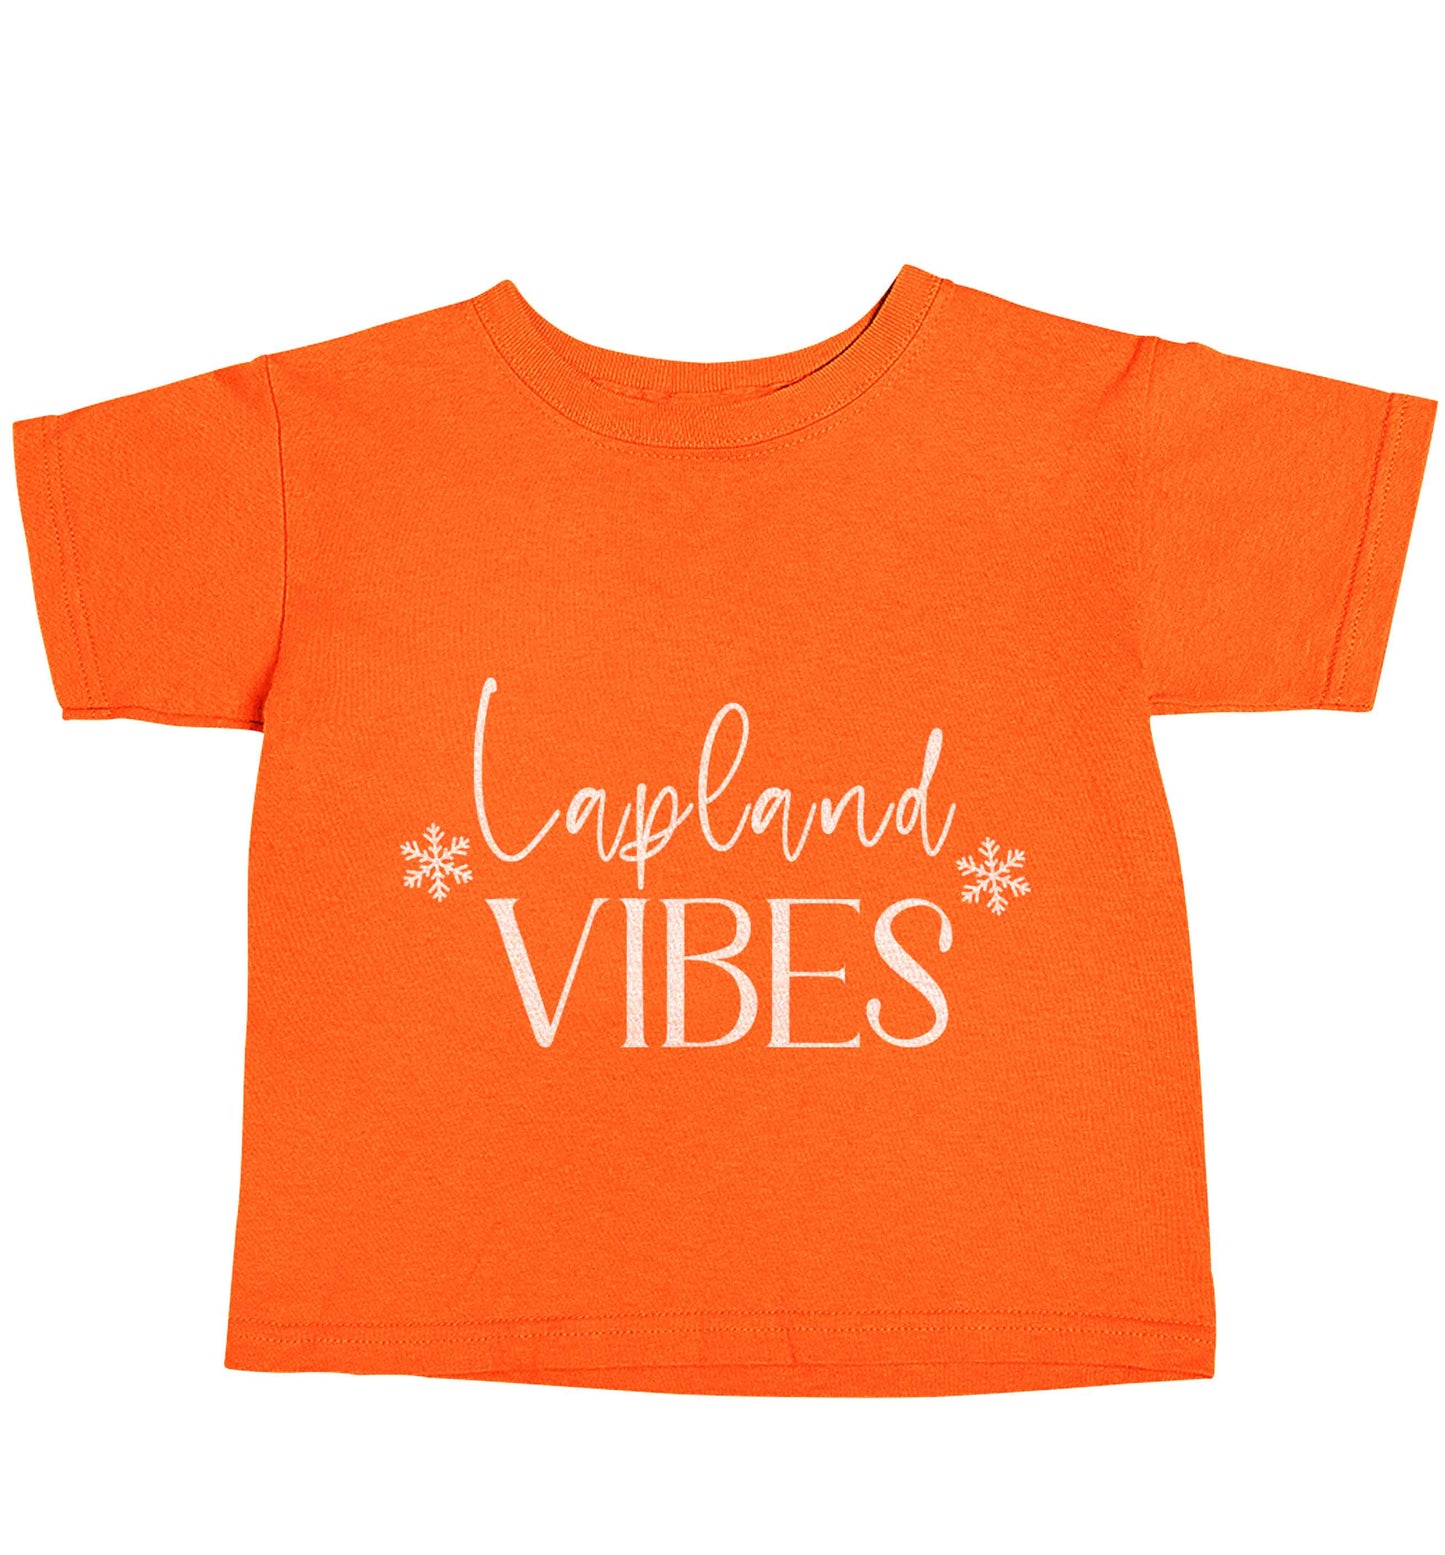 Lapland vibes orange baby toddler Tshirt 2 Years